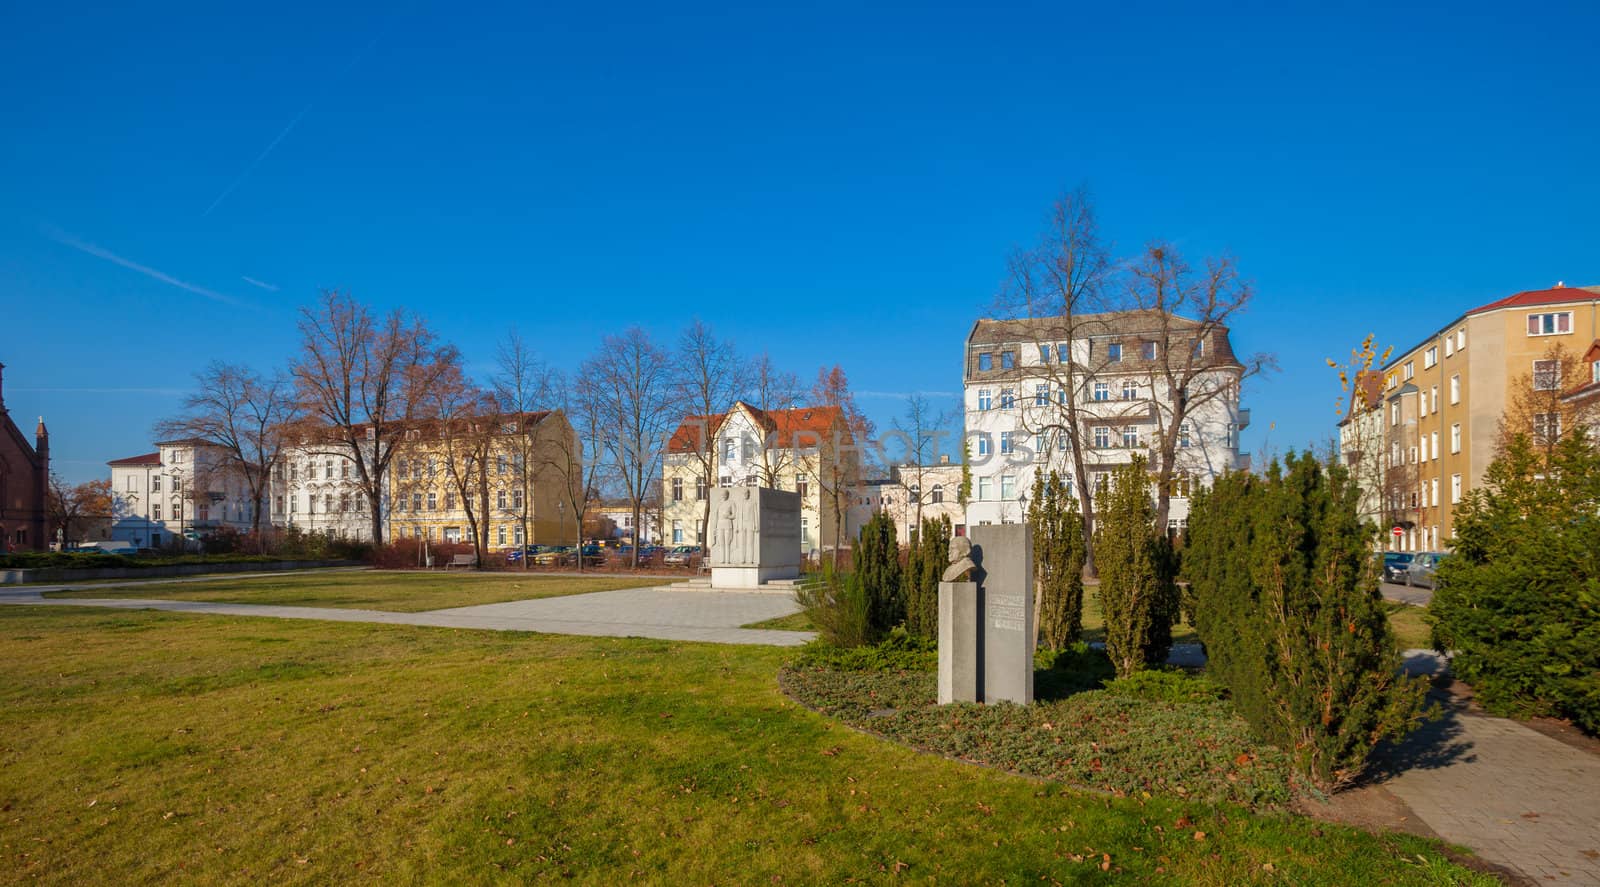 Ottomar Geschke Square with blue sky, Fuerstenwalde, Brandenburg, Germany